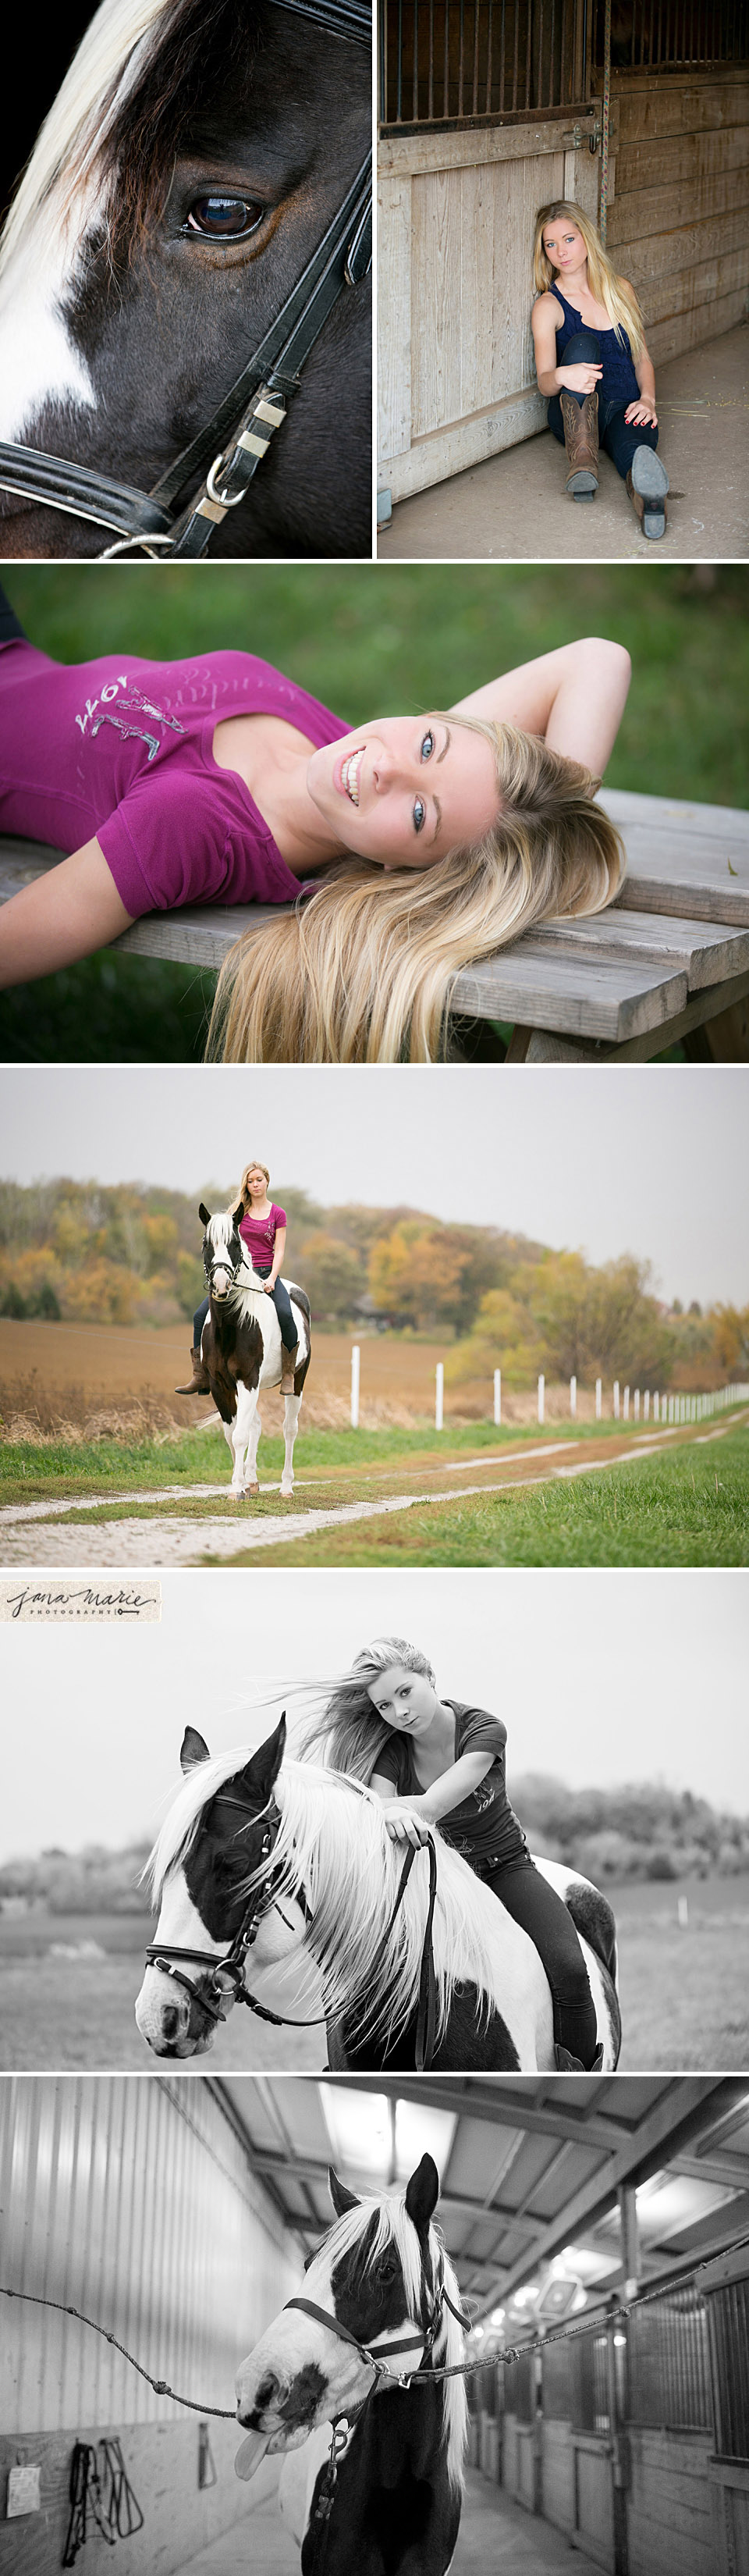 Paint horses, Independence senior portraits, Jana Marie Photography, Fall colors, bare back riding